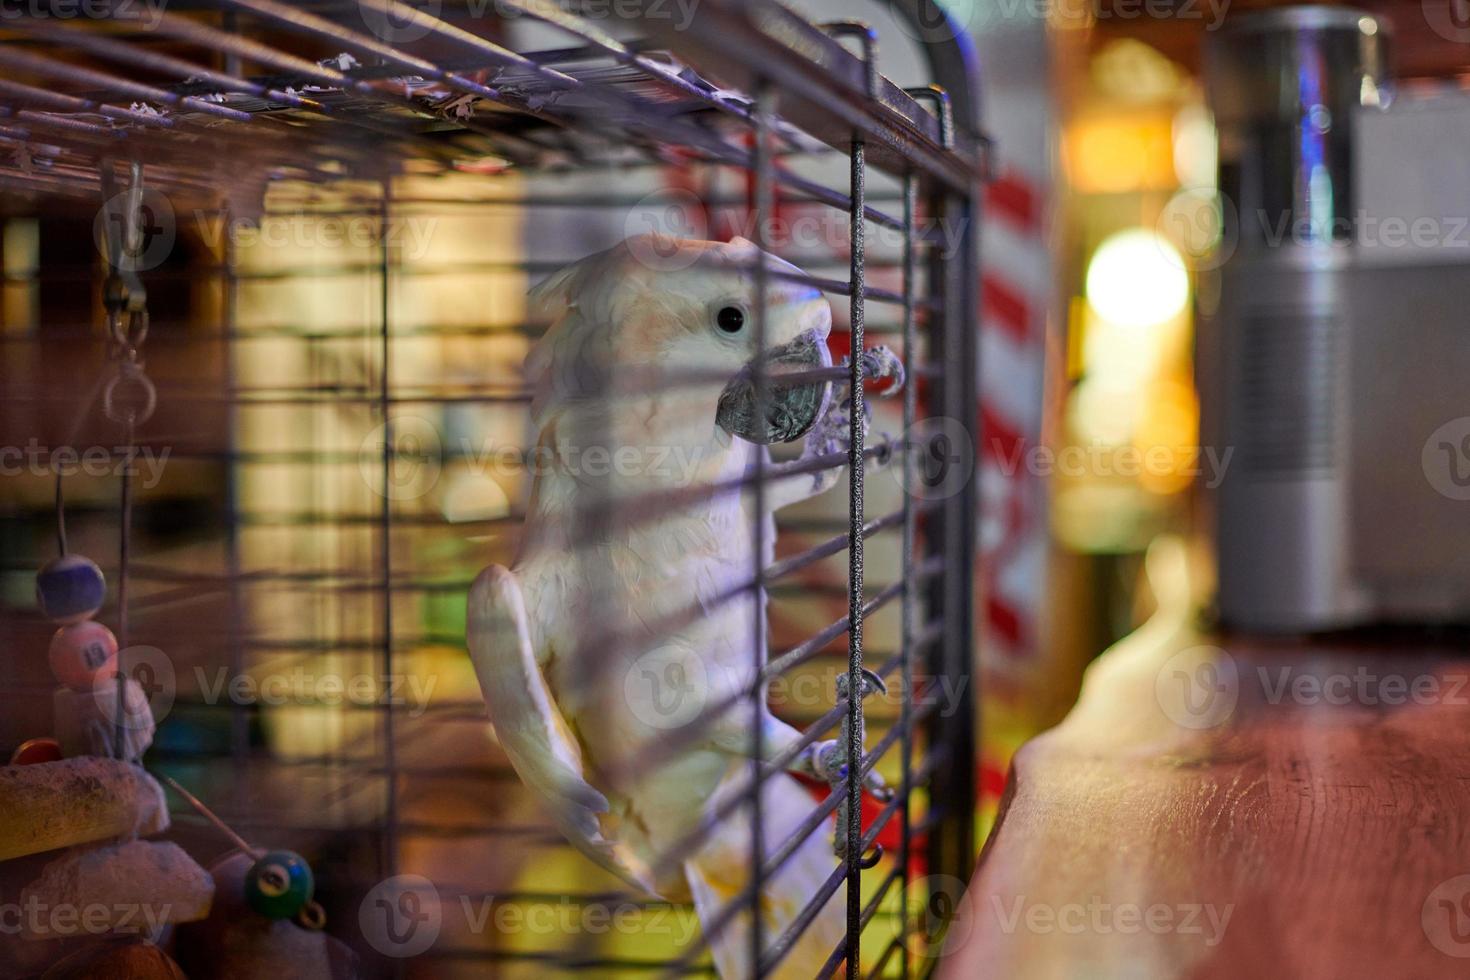 Cute white Cacatua cockatoo parrot in cage in cafe interior background, funny domestic bird photo